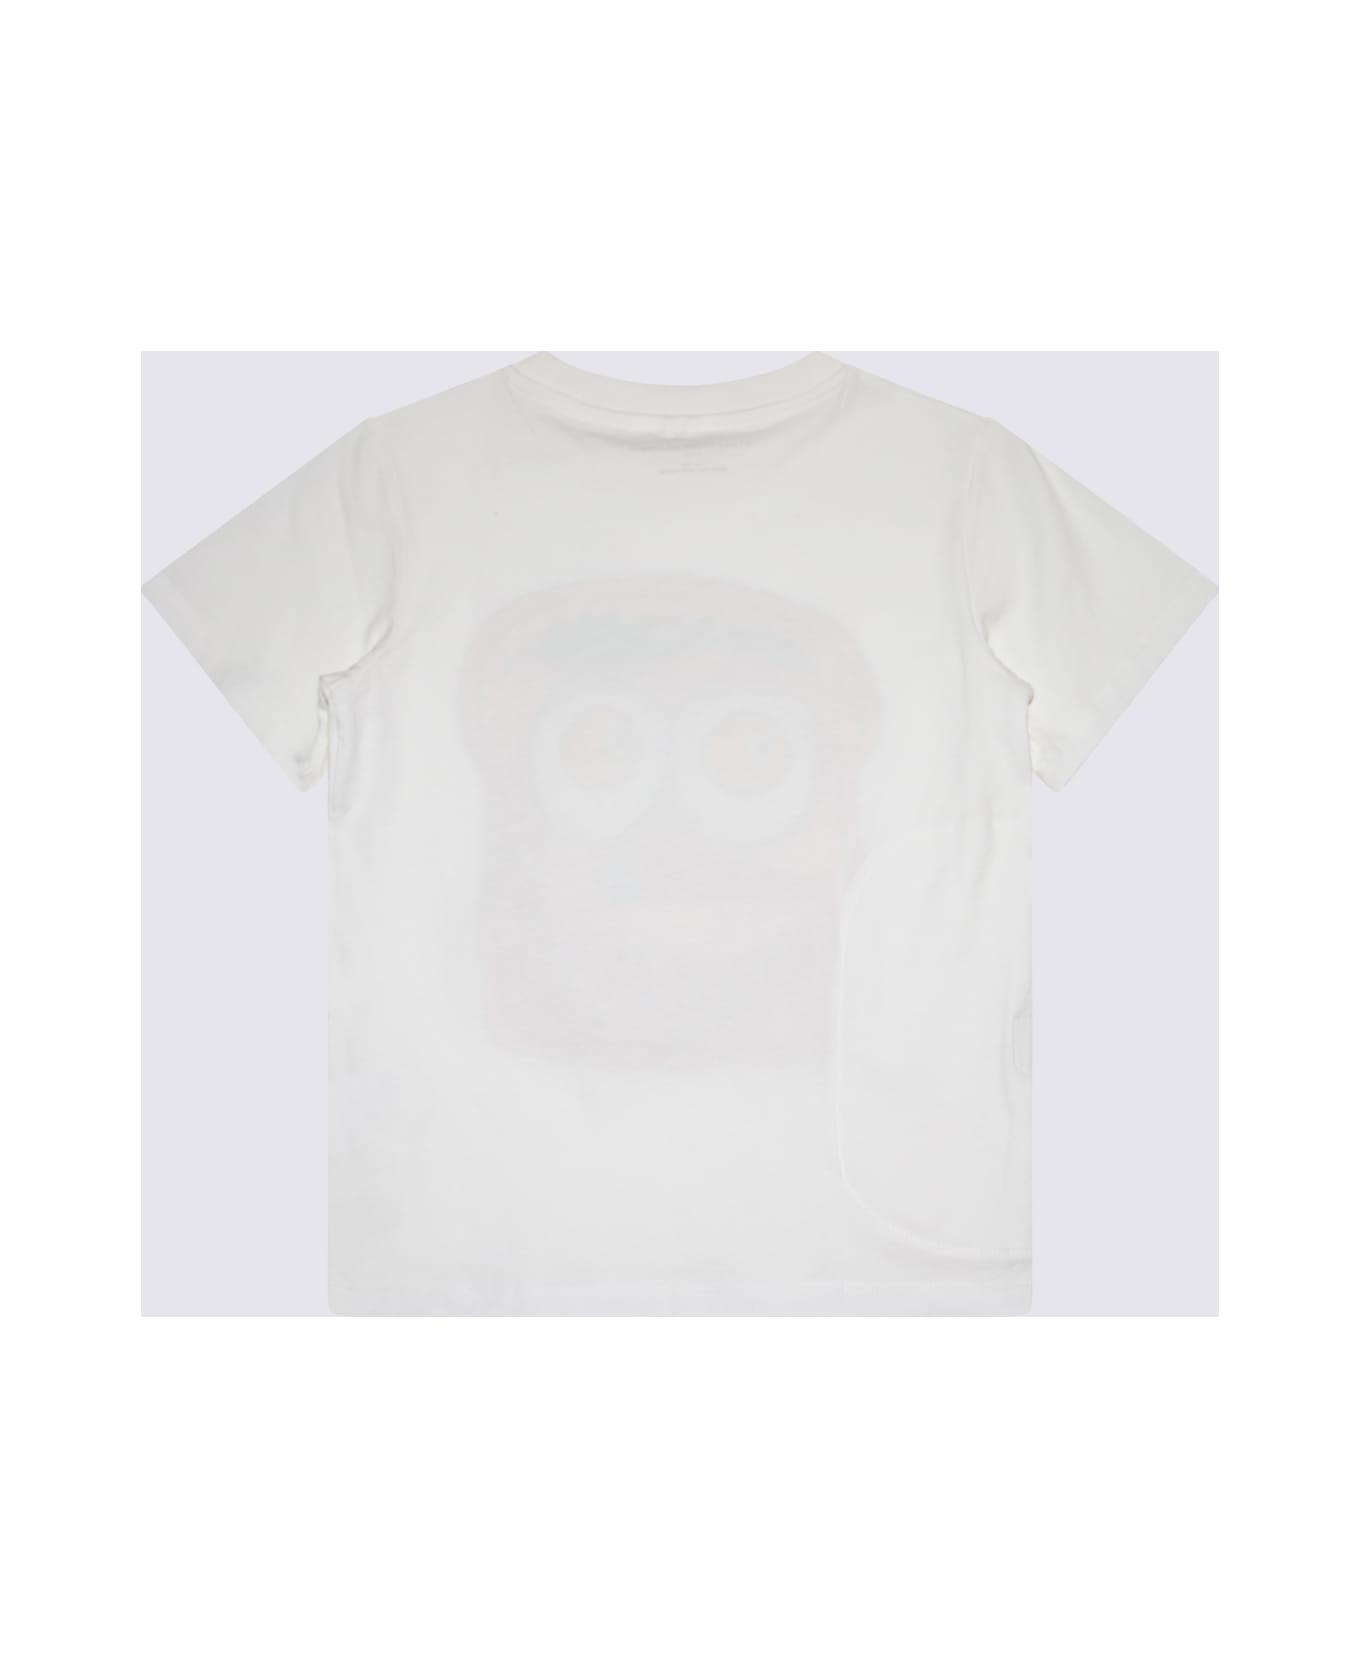 Stella McCartney White Cotton T-shirt - White